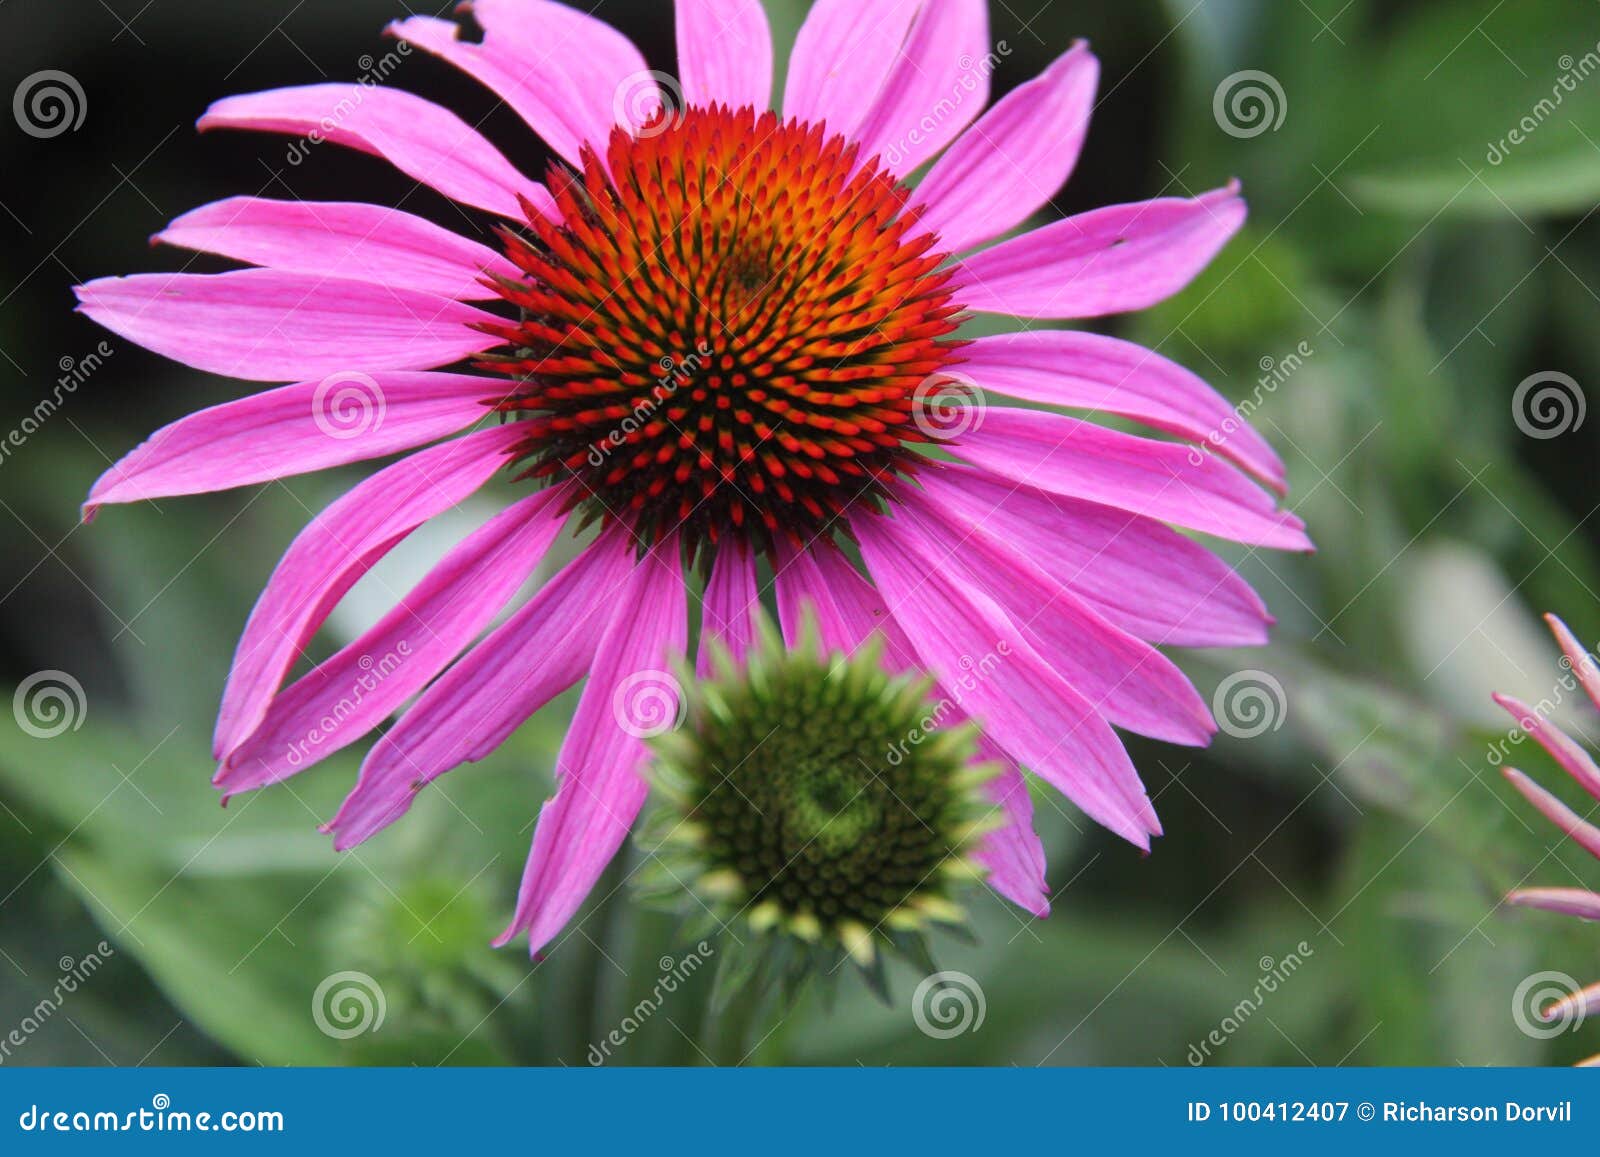 Daisy flower stock image. Image of flowers, jardins - 100412407